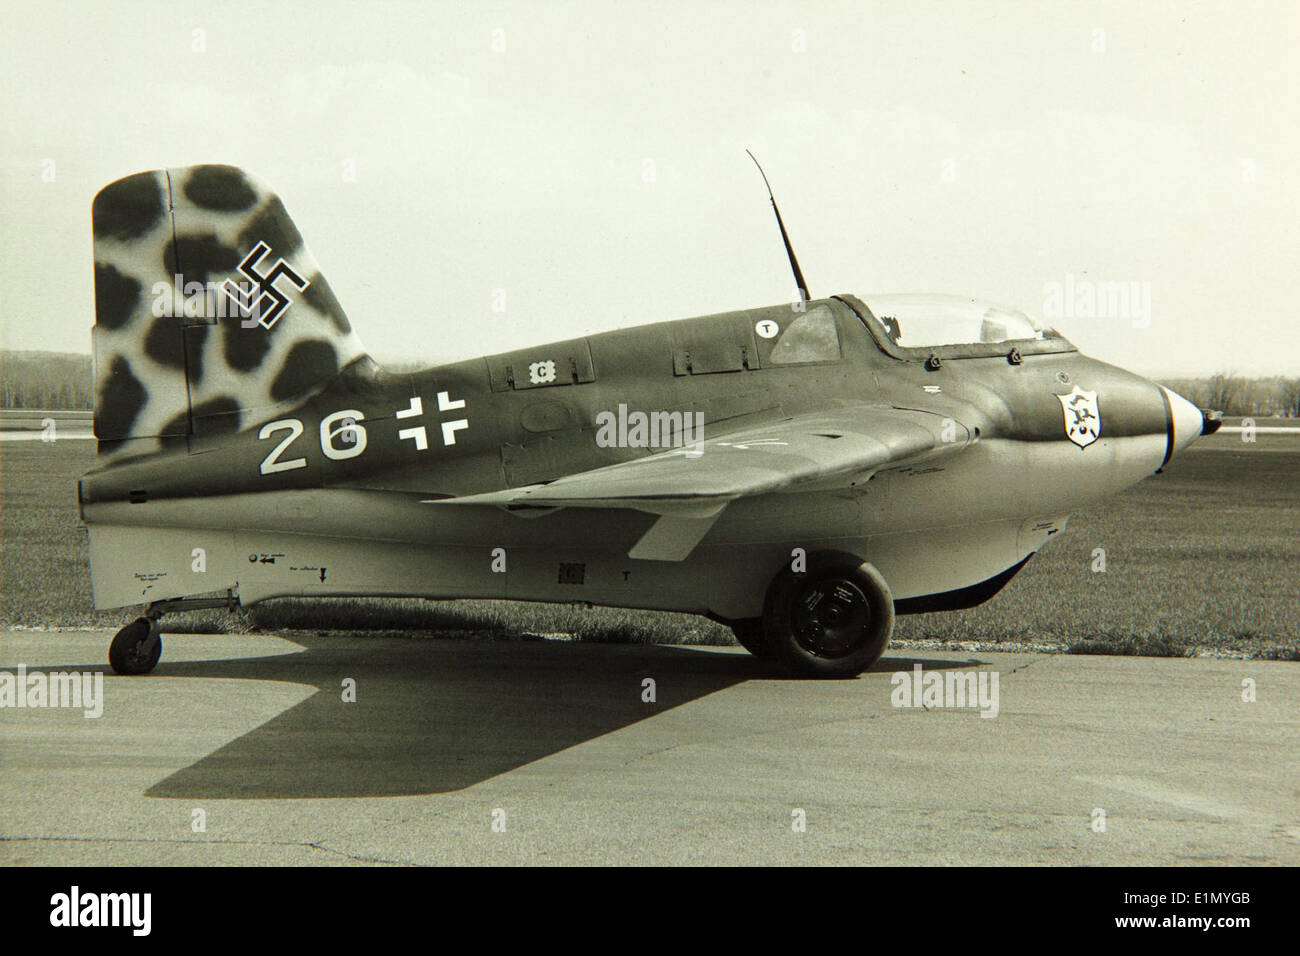 Messerschmitt Me 163 High Resolution Stock Photography And Images Alamy